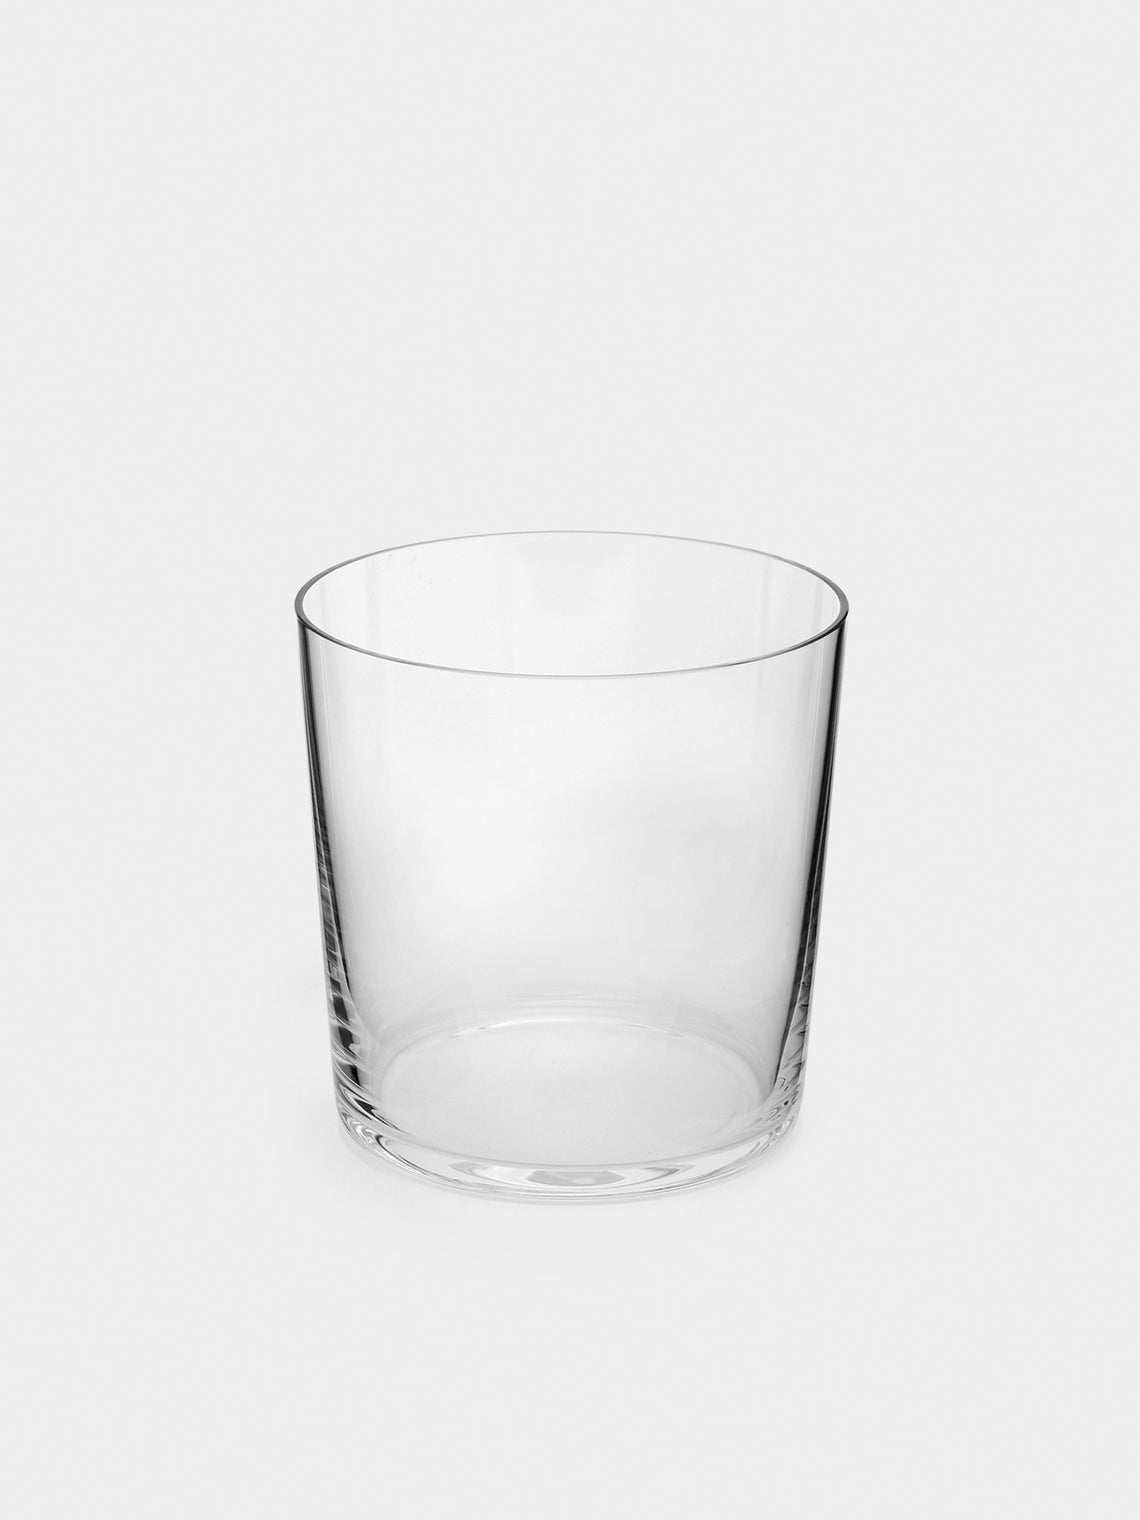 Richard Brendon - Hand-Blown Crystal Rocks Glasses (Set of 2) - Clear - ABASK - 